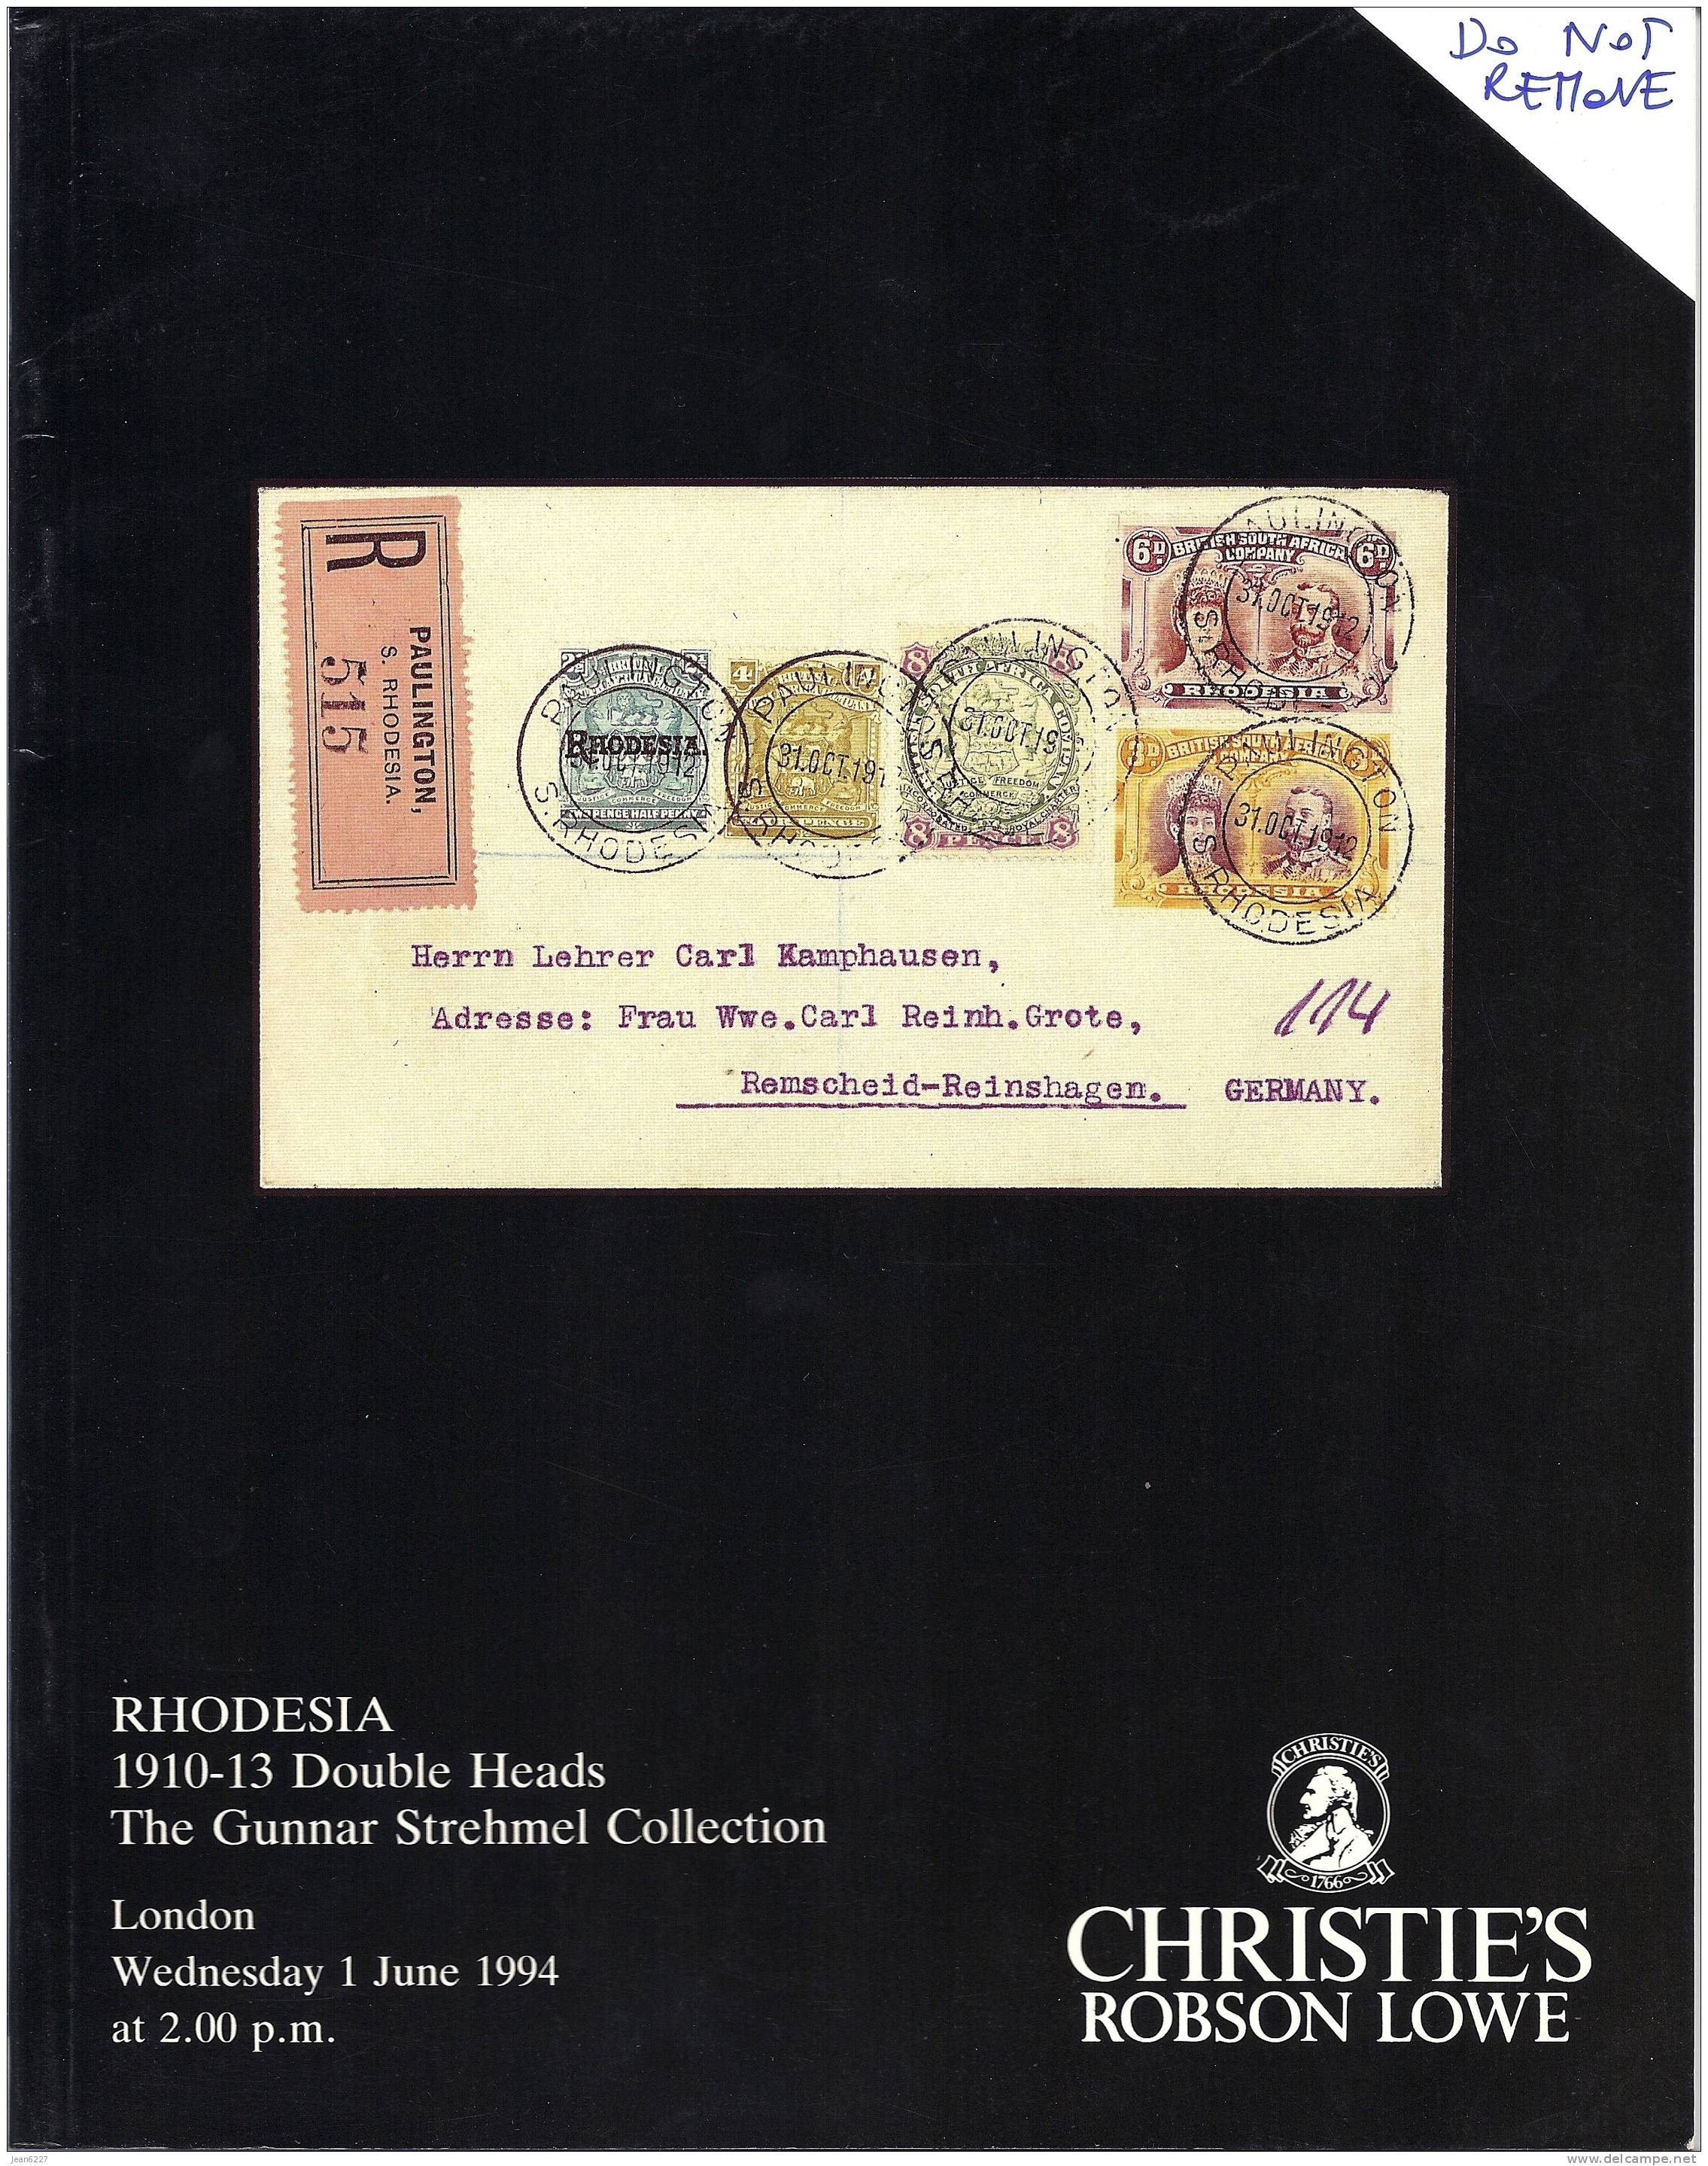 Christies - Rhodesia Stamps - Cataloghi Di Case D'aste